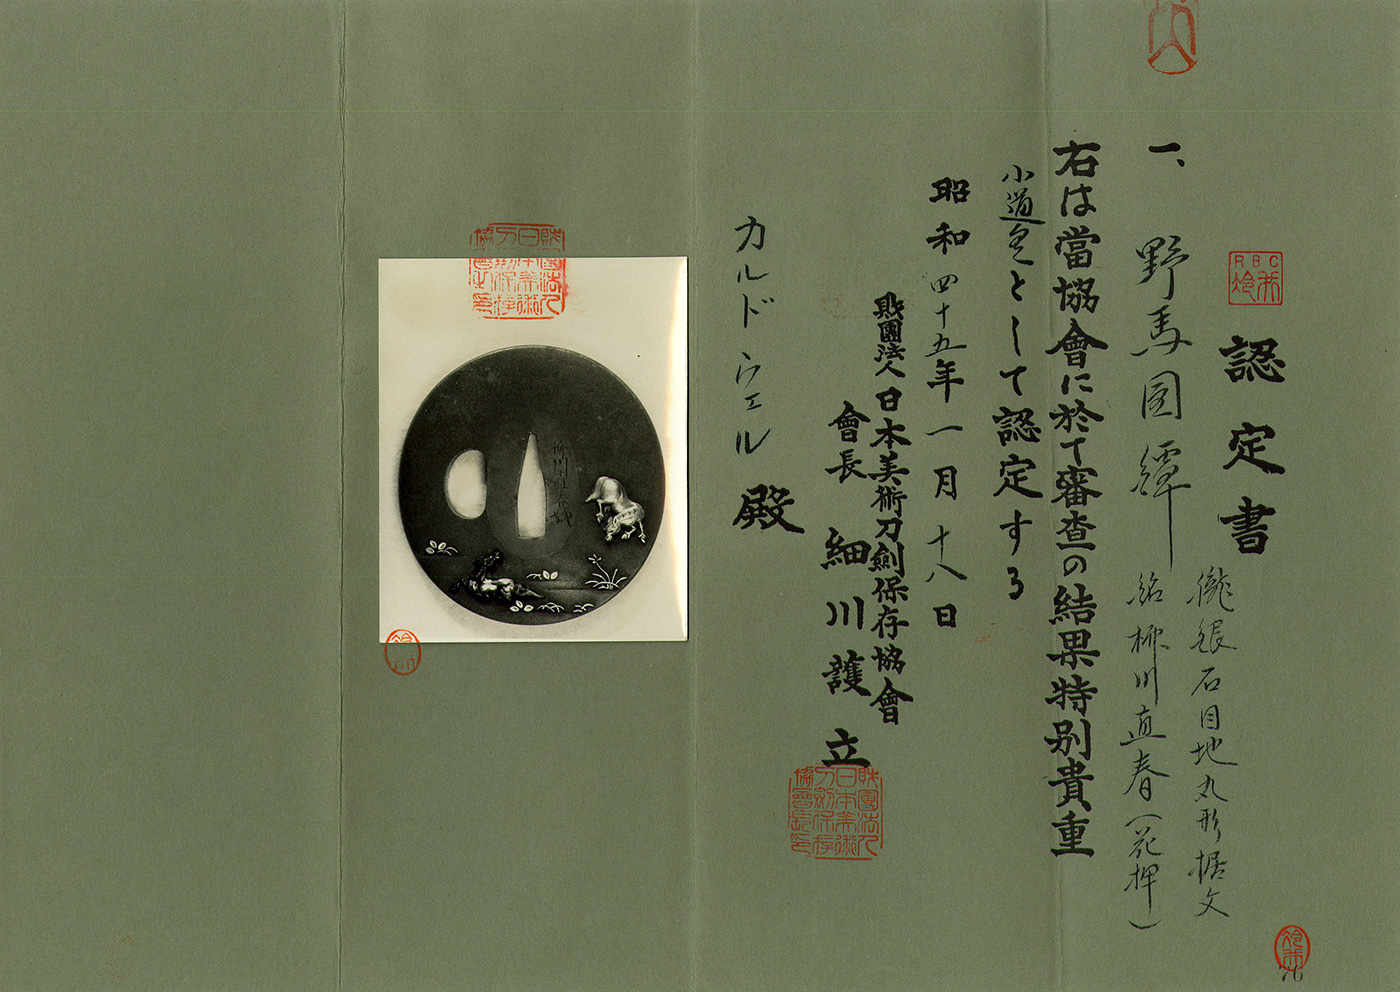 AF23197 鐔: 柳川直春(花押)(特別貴重刀装具) – 日本刀販売の葵美術